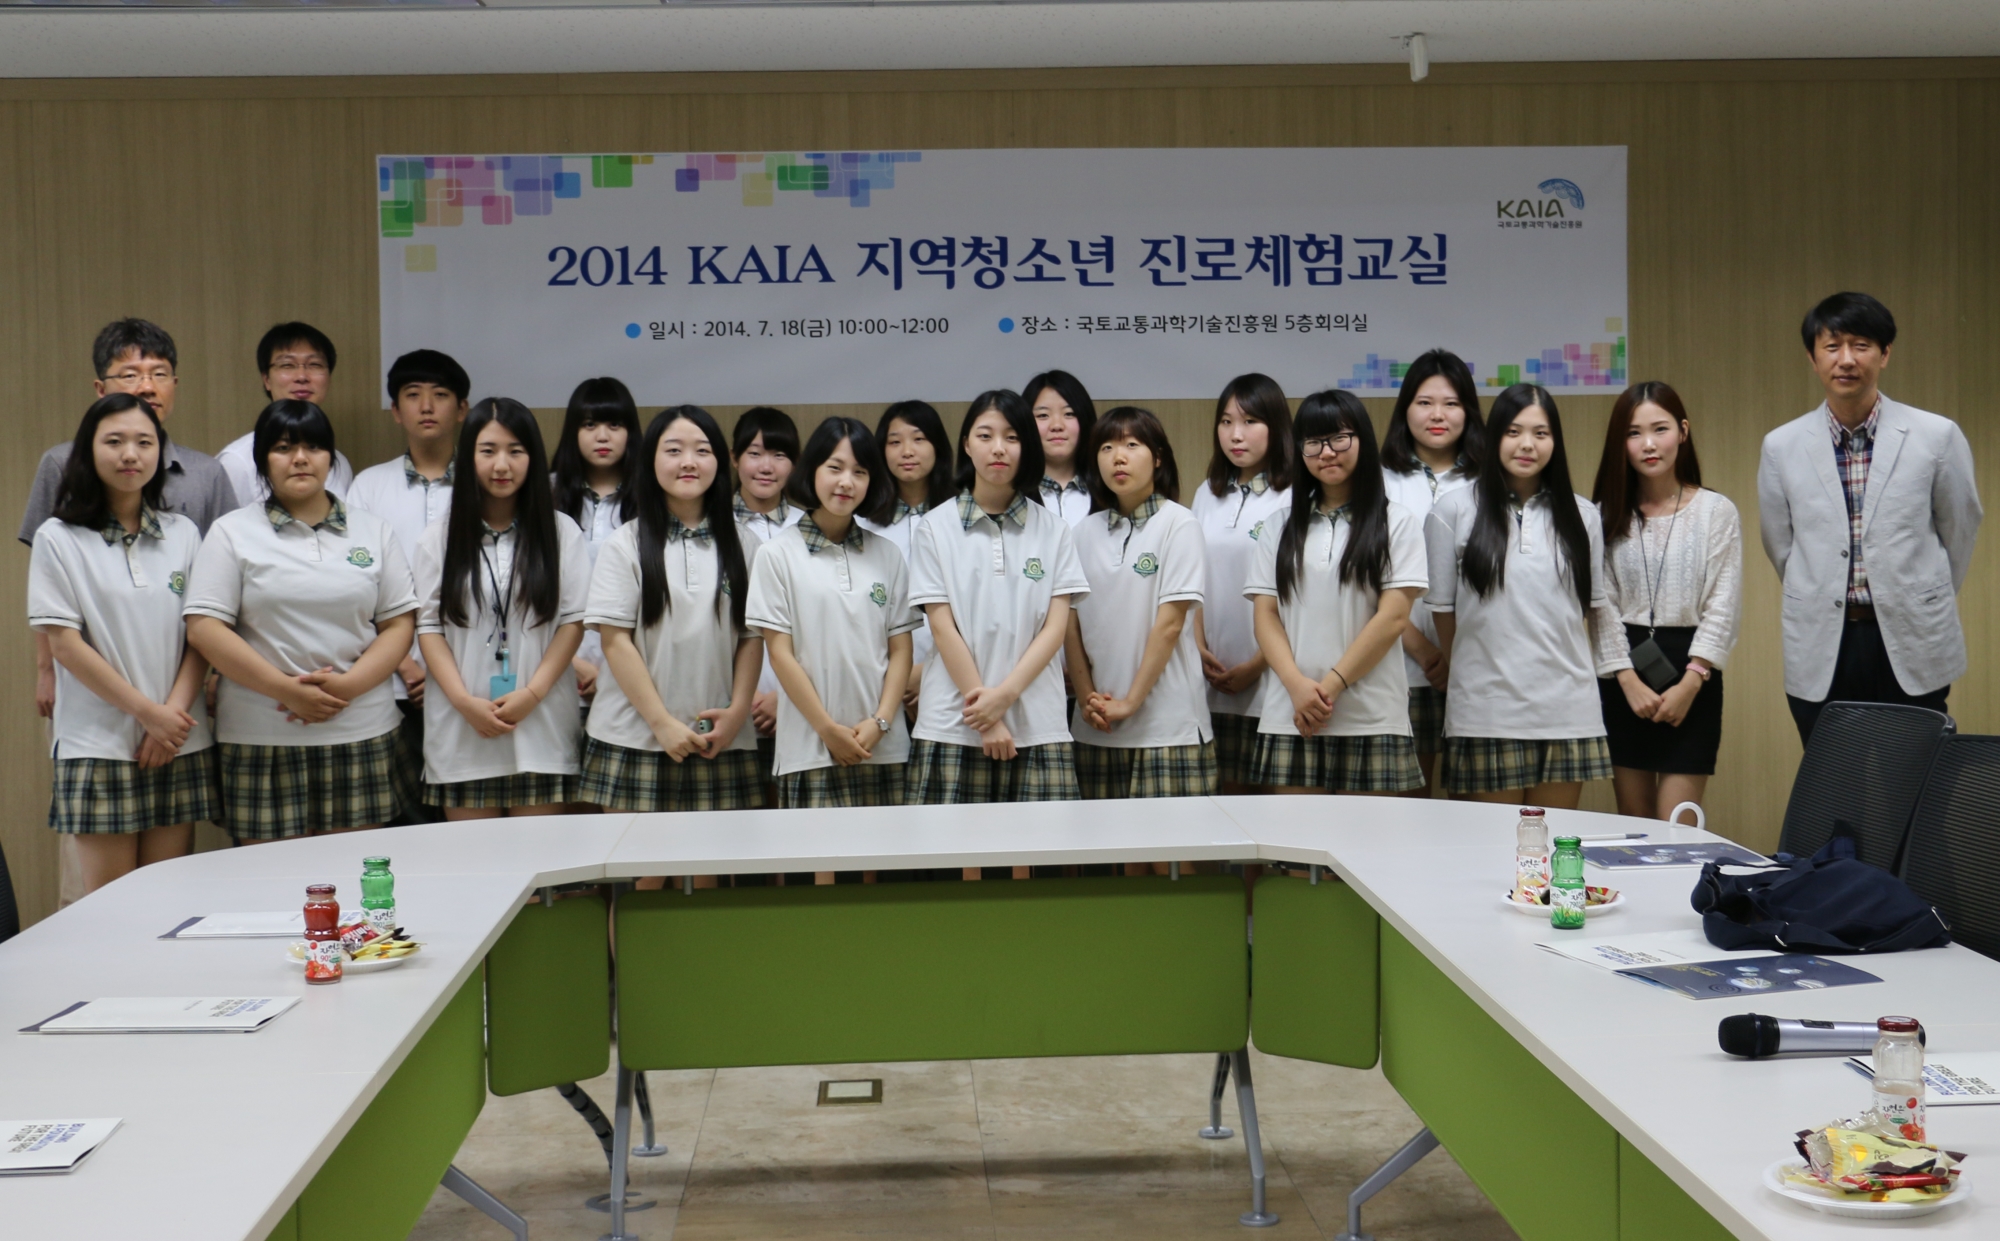 2014 KAIA 지역청소년 진로체험교실 